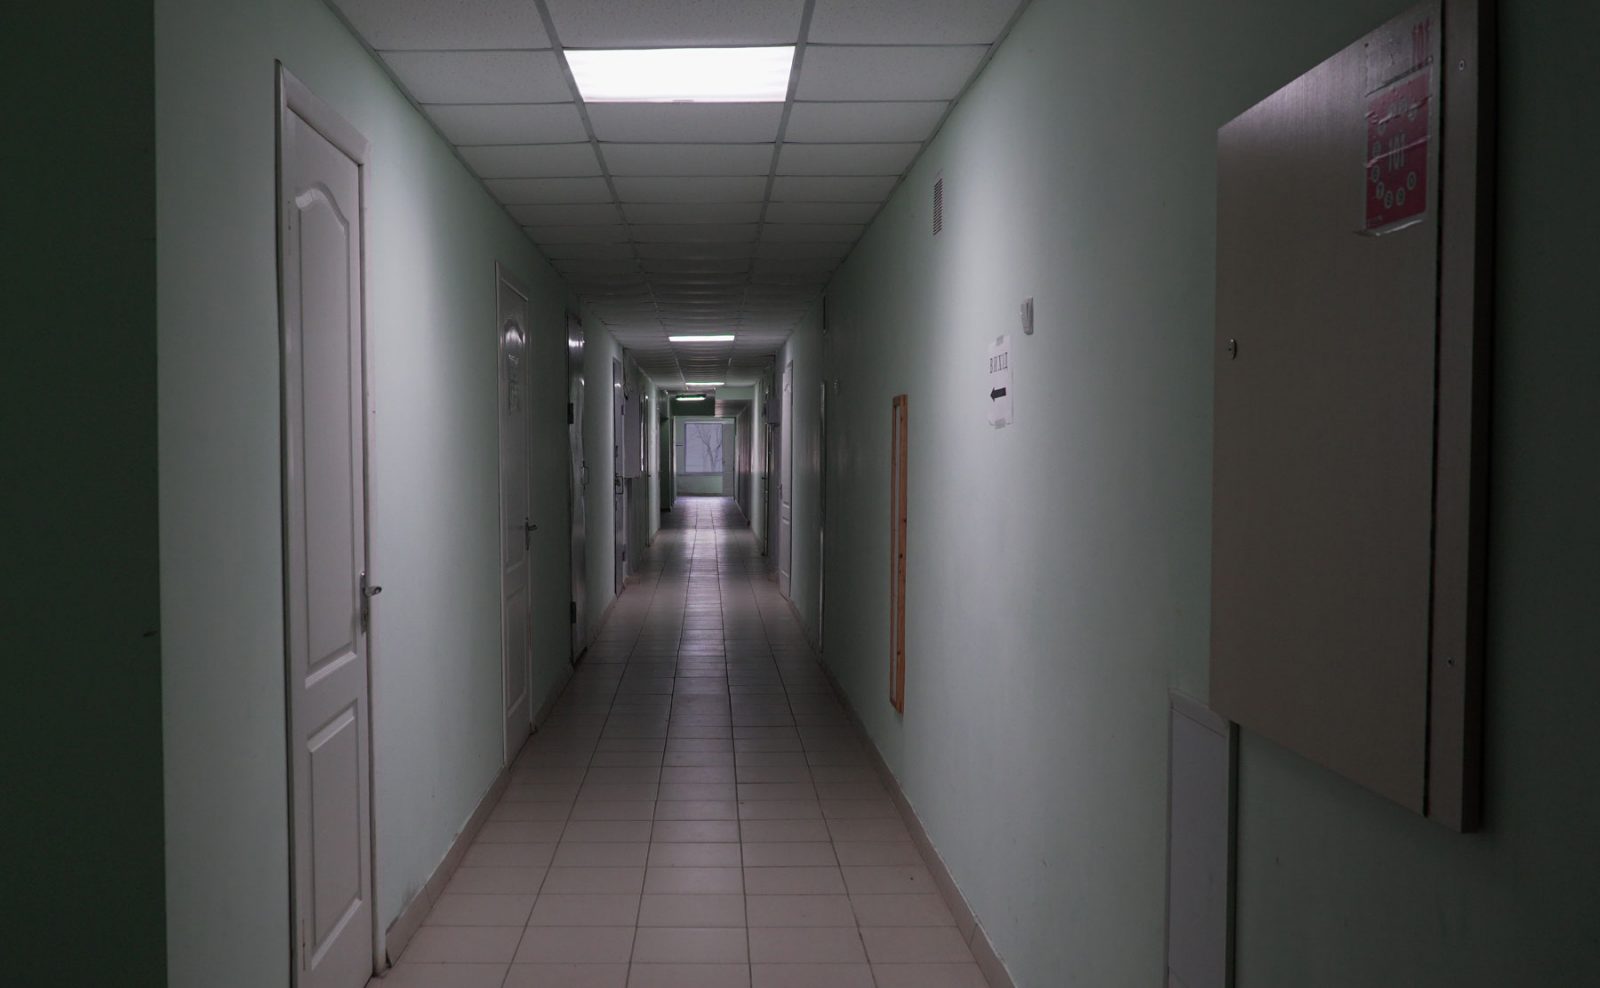 https://www.litetronics.com/wp-content/uploads/2021/05/Hospital-hallway-with-emergency-light-1600x988.jpg